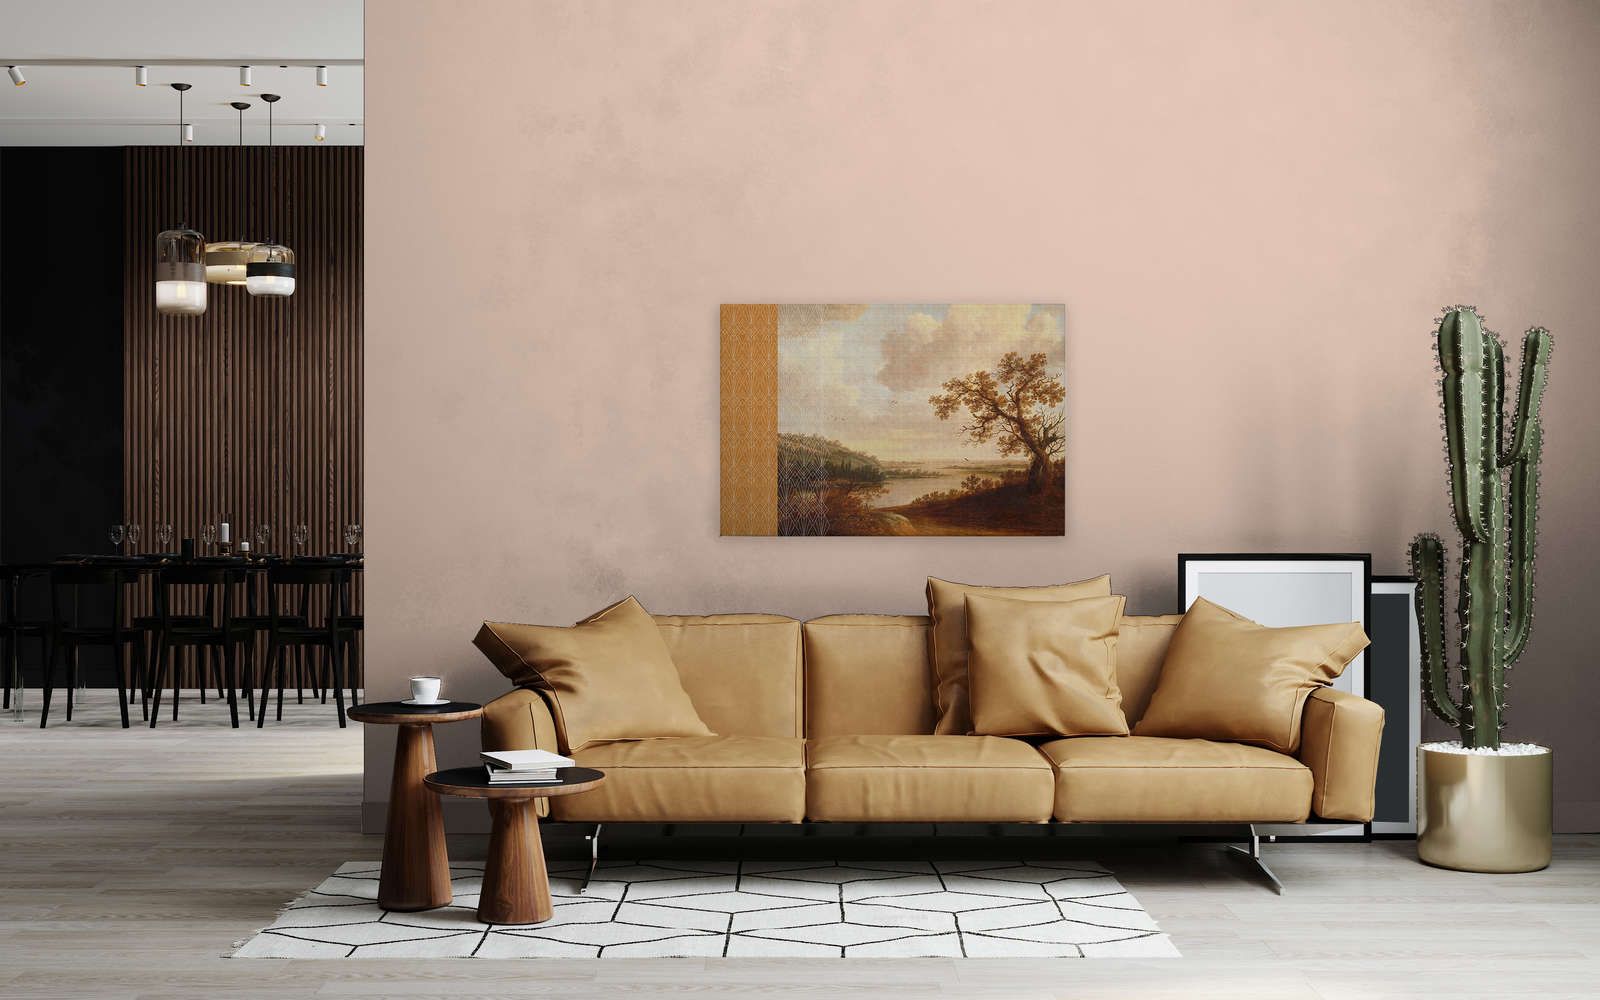             Cortina 1 - Yellow Canvas Painting Art Mix Painting & Graphic Pattern - 1.20 m x 0.80 m
        